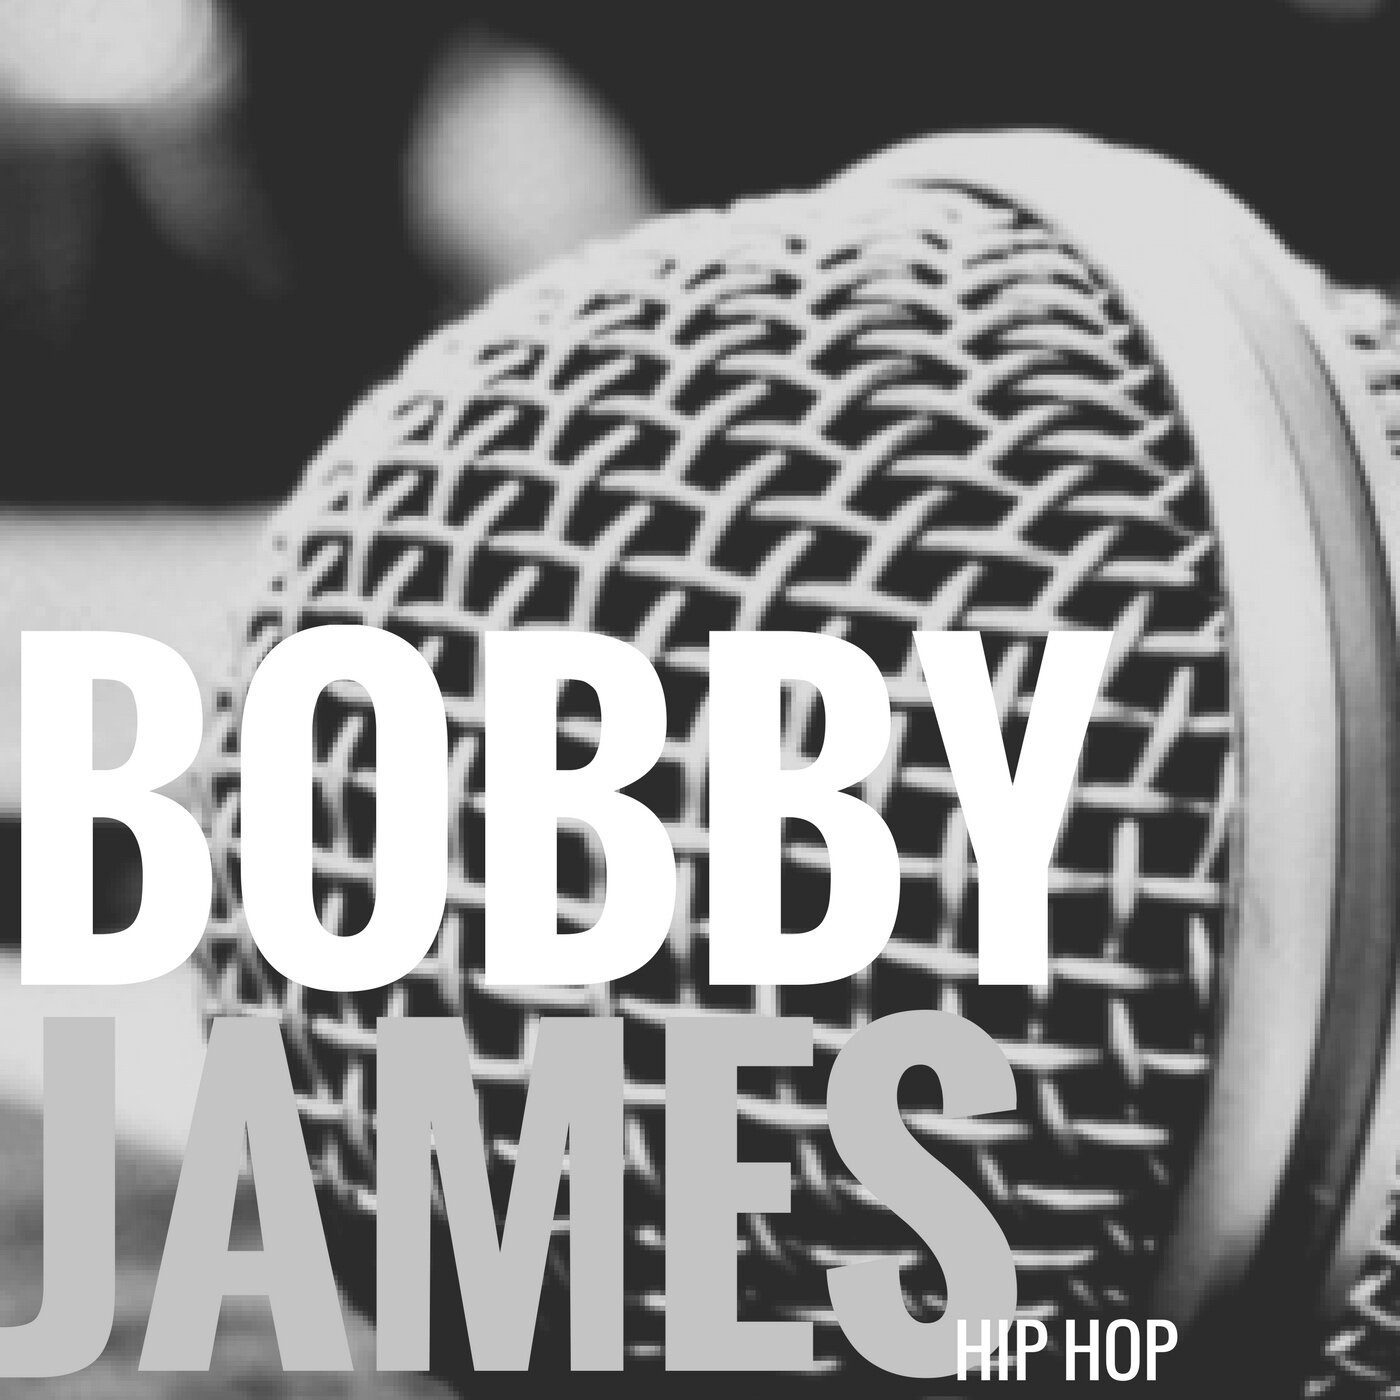 Bobby James